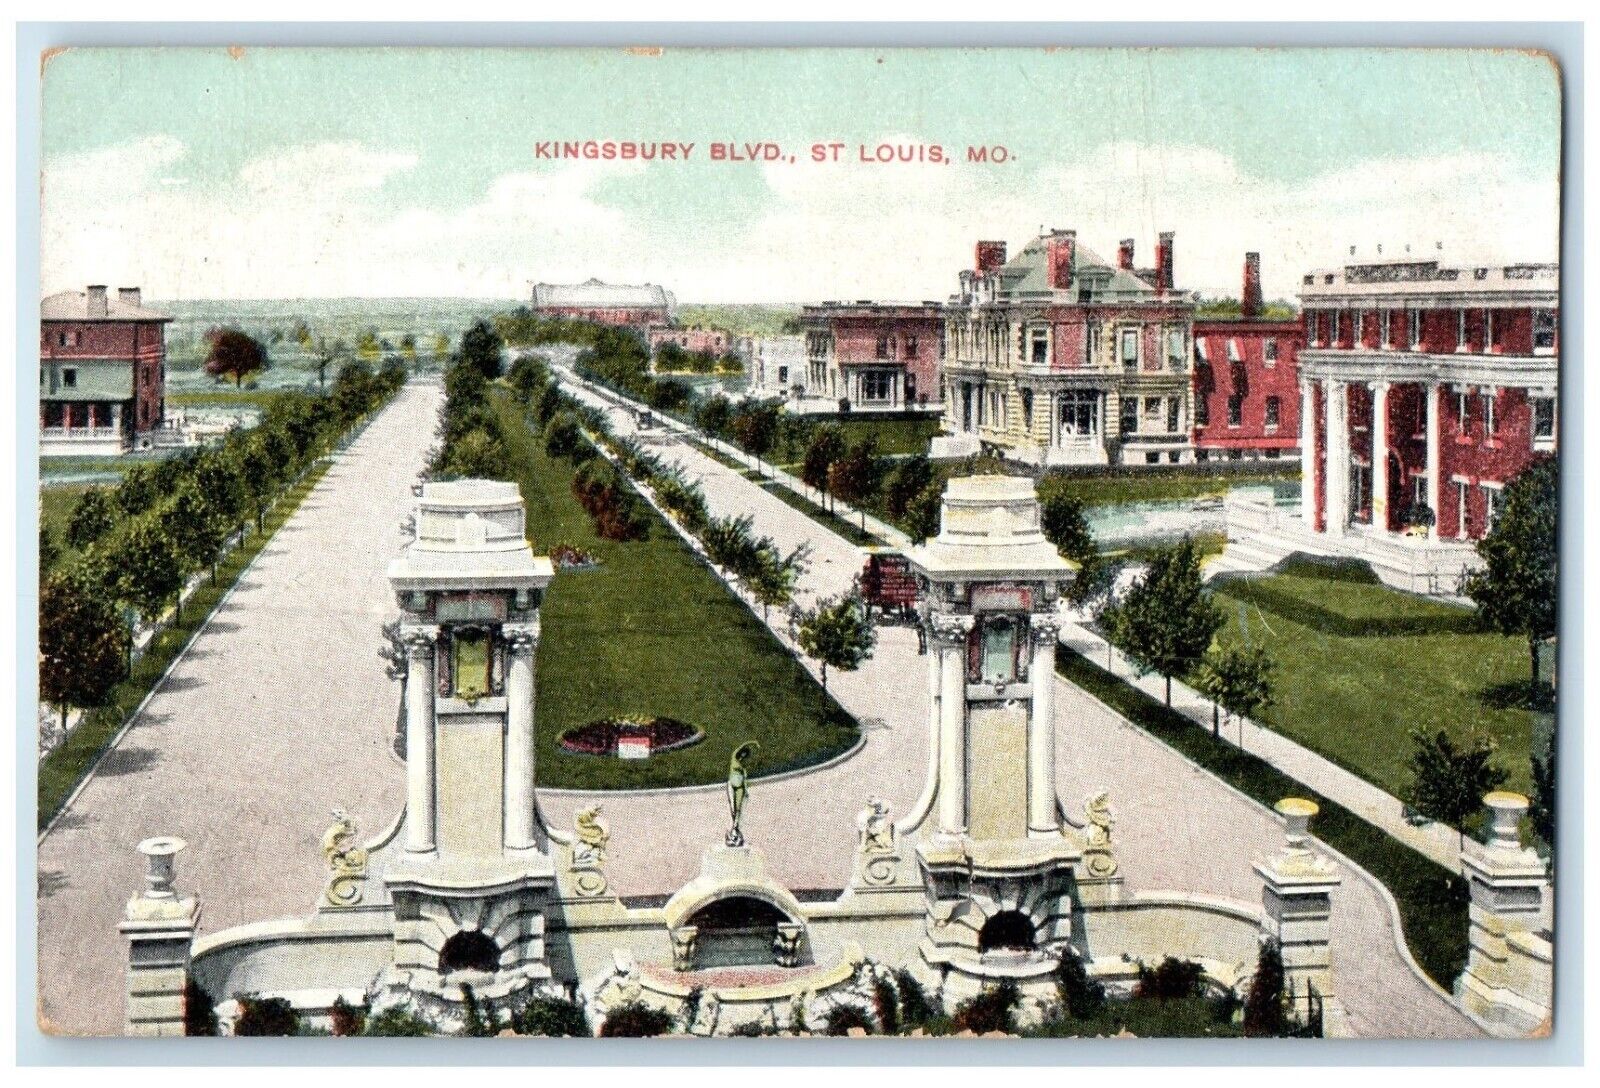 1908 Kingsbury Boulevard Exterior Building St. Louis Missouri Vintage Postcard